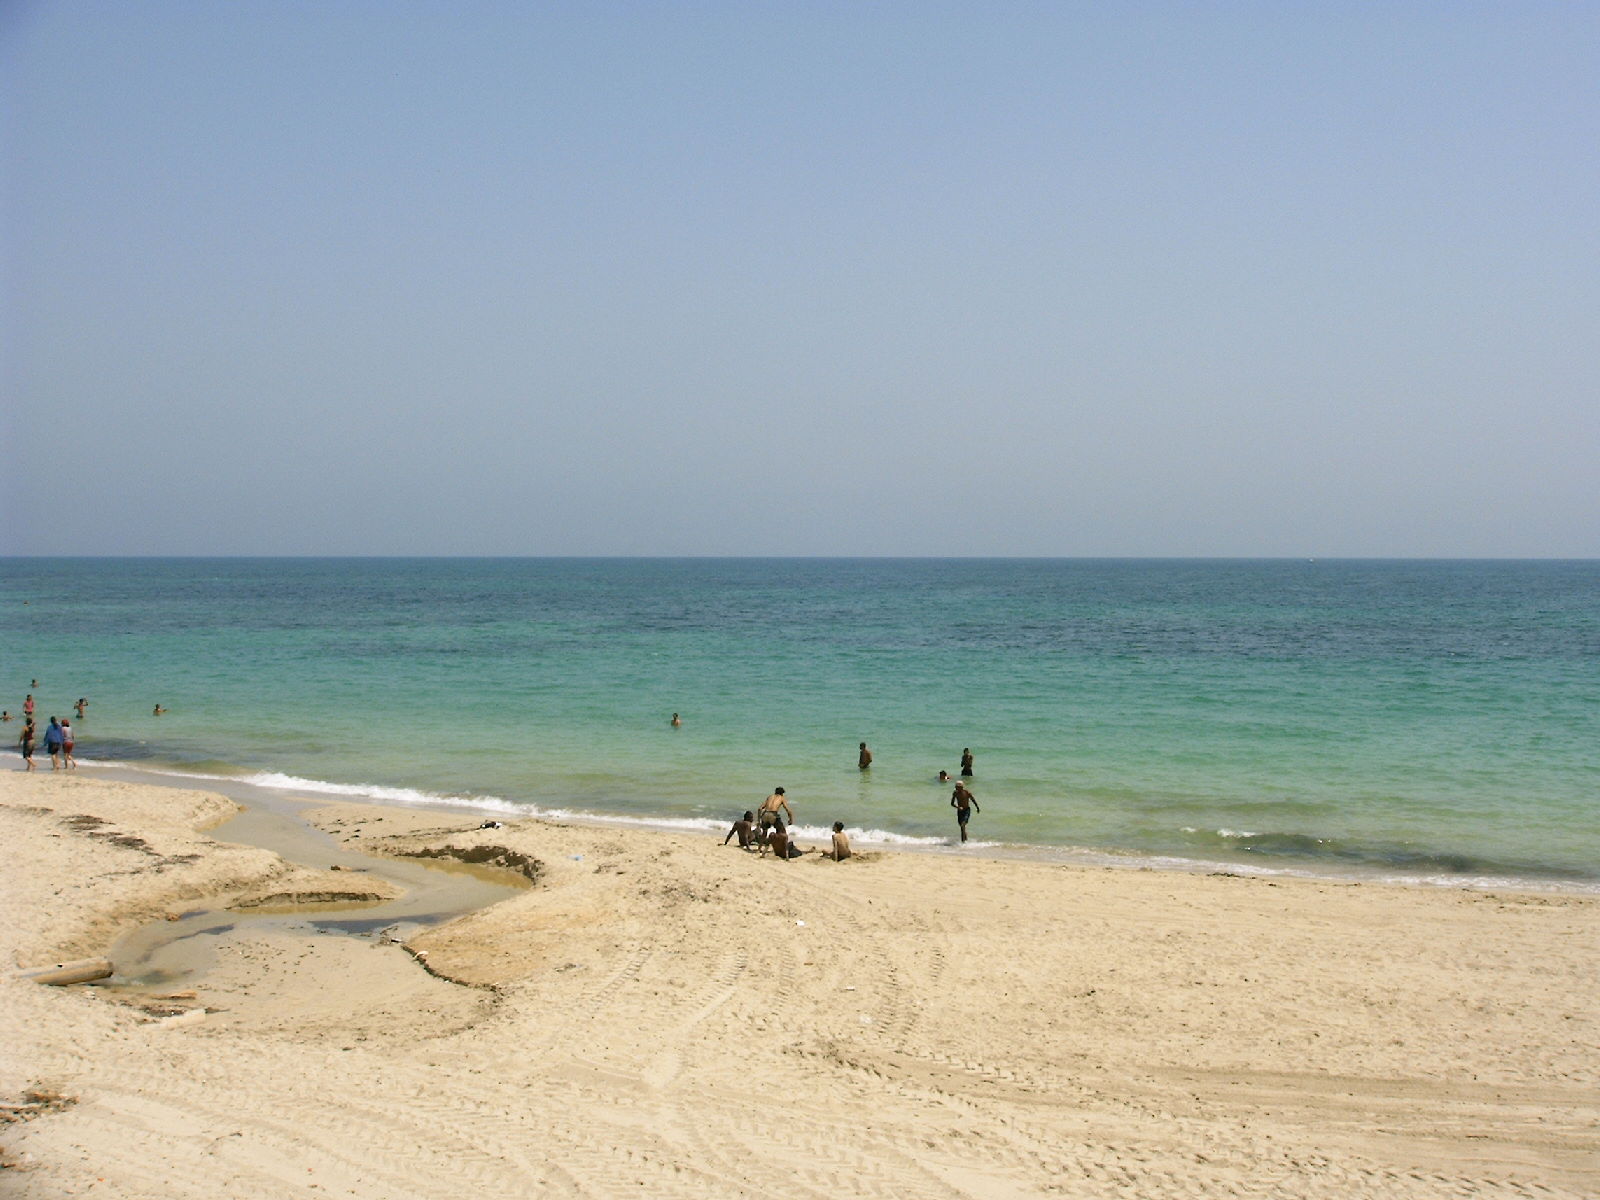 Fotografie cu Al-Swehel beach cu golful spațios